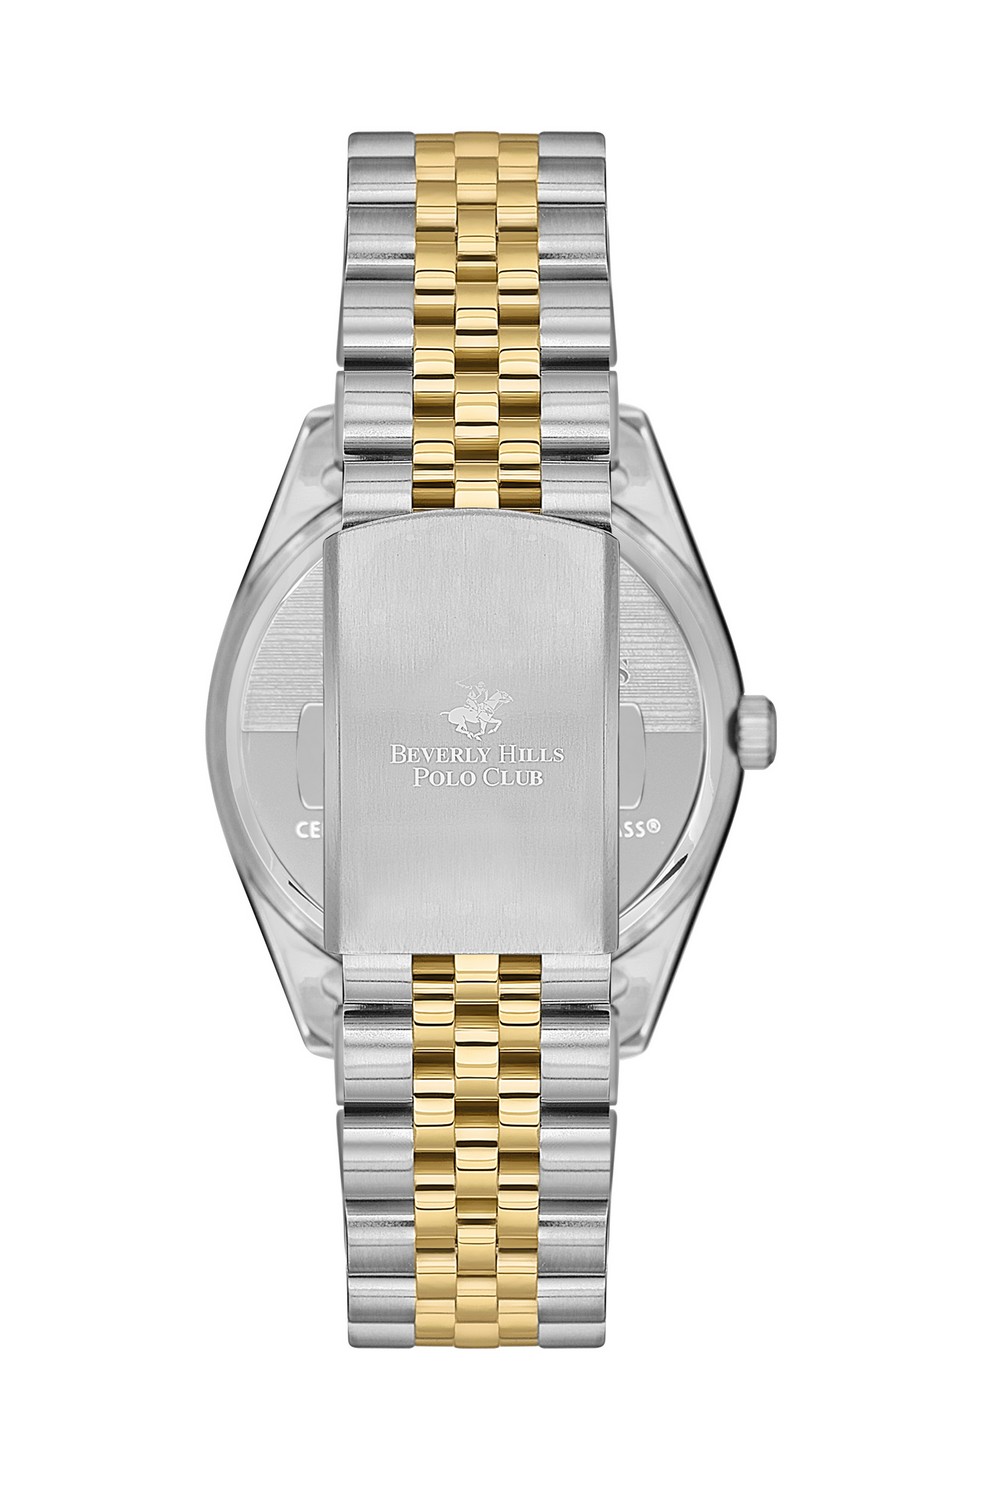 BEVERLY HILLS POLO CLUB  Женские часы, кварцевый механизм, суперметалл с покрытием, 36 мм